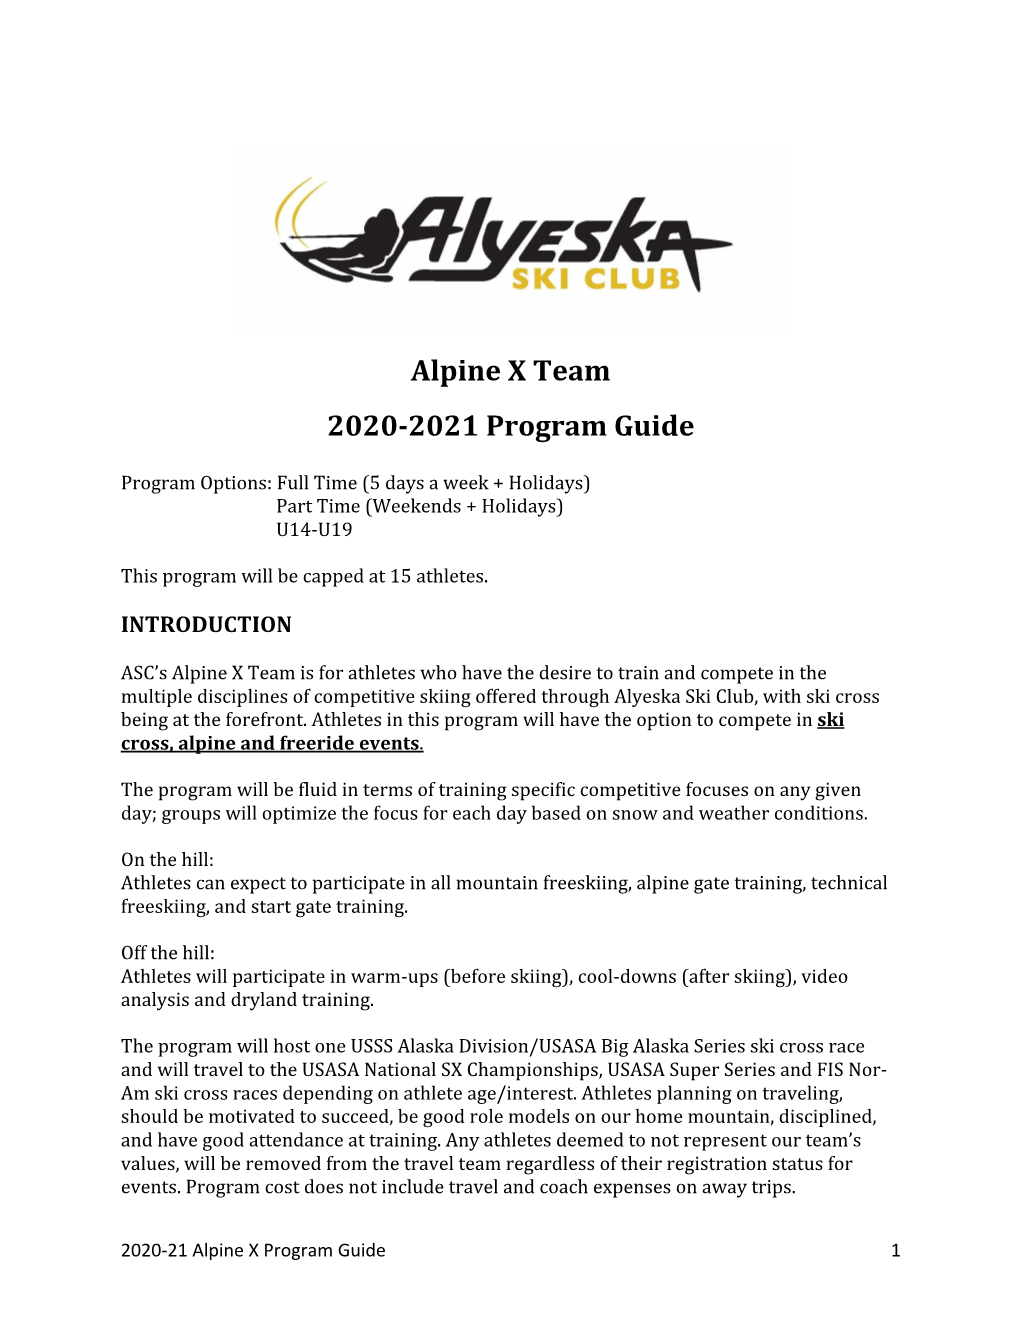 Alpine X Team 2020-2021 Program Guide